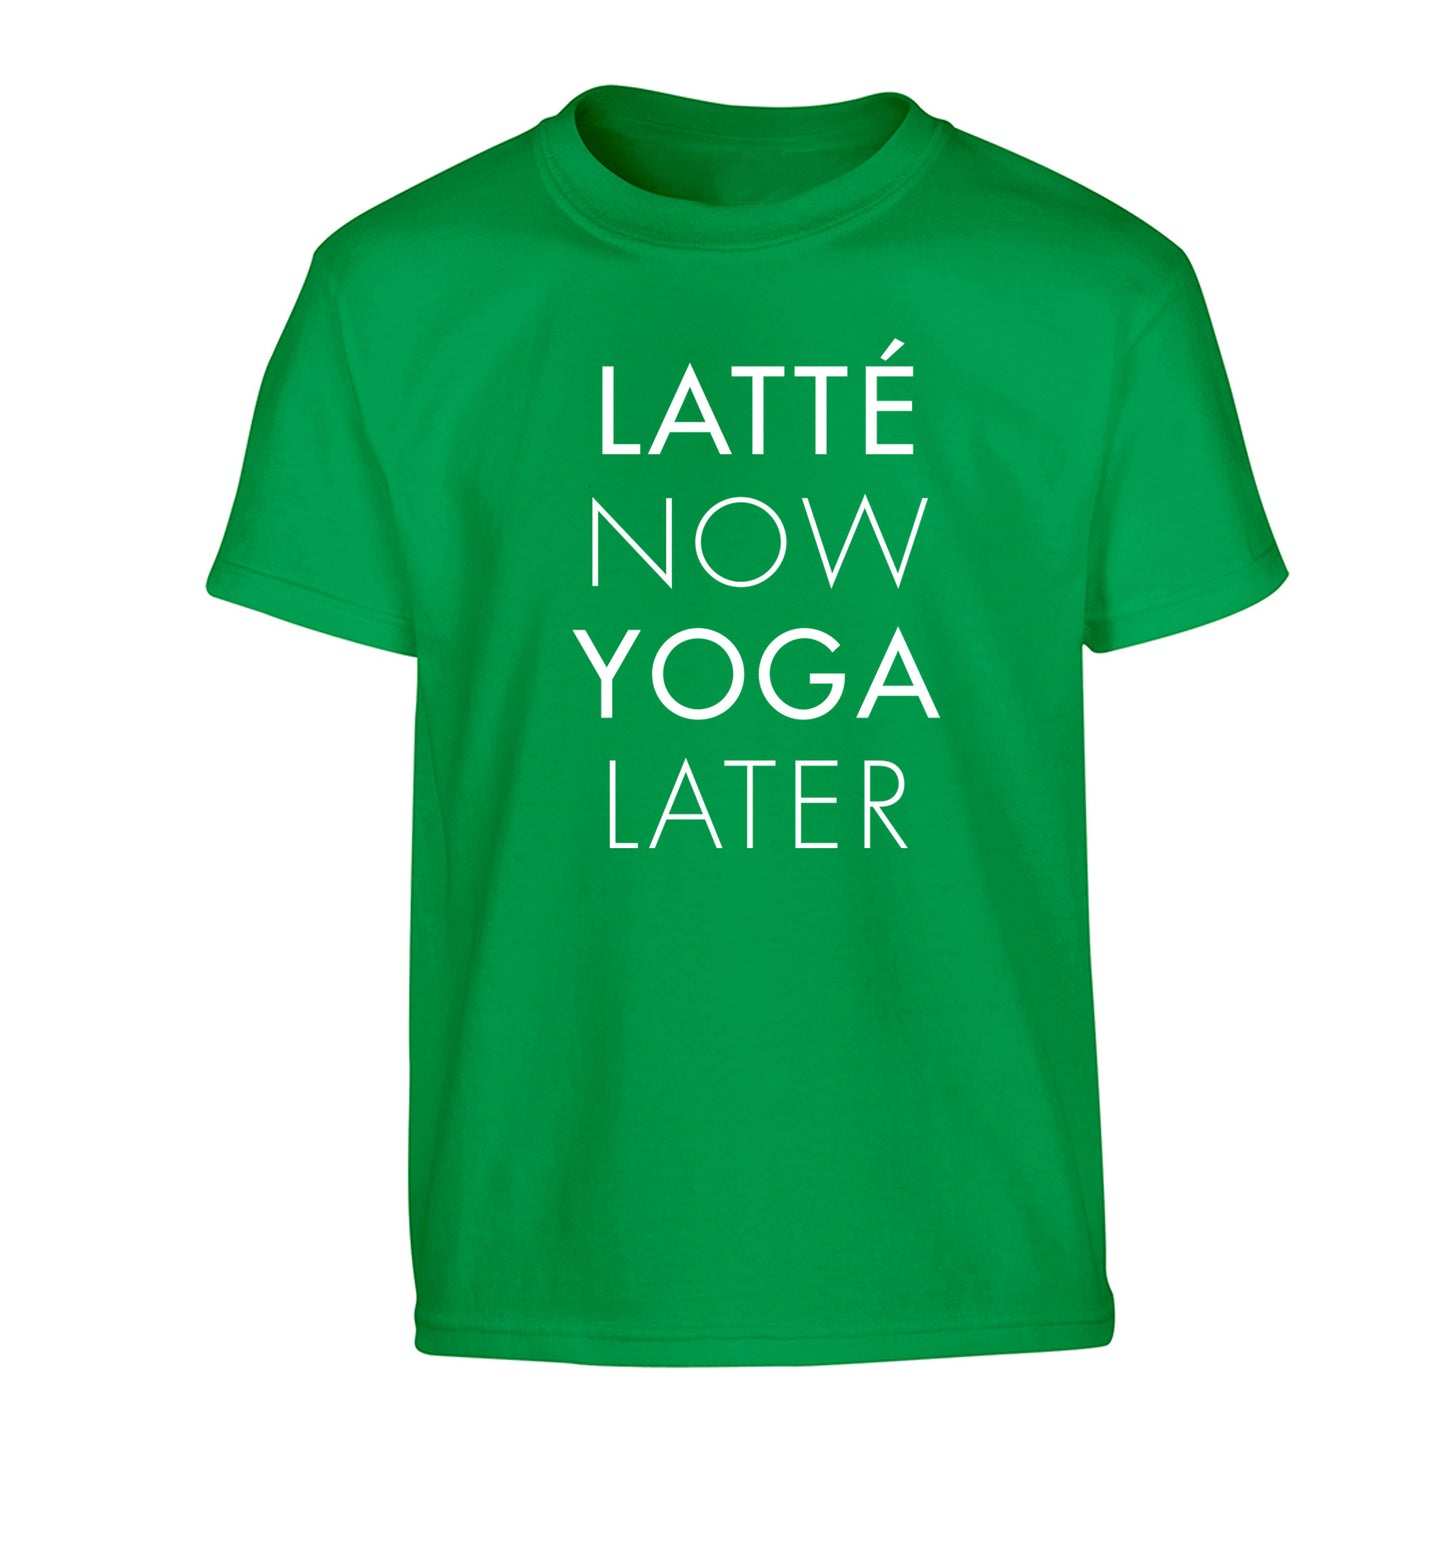 Latte now yoga later Children's green Tshirt 12-14 Years